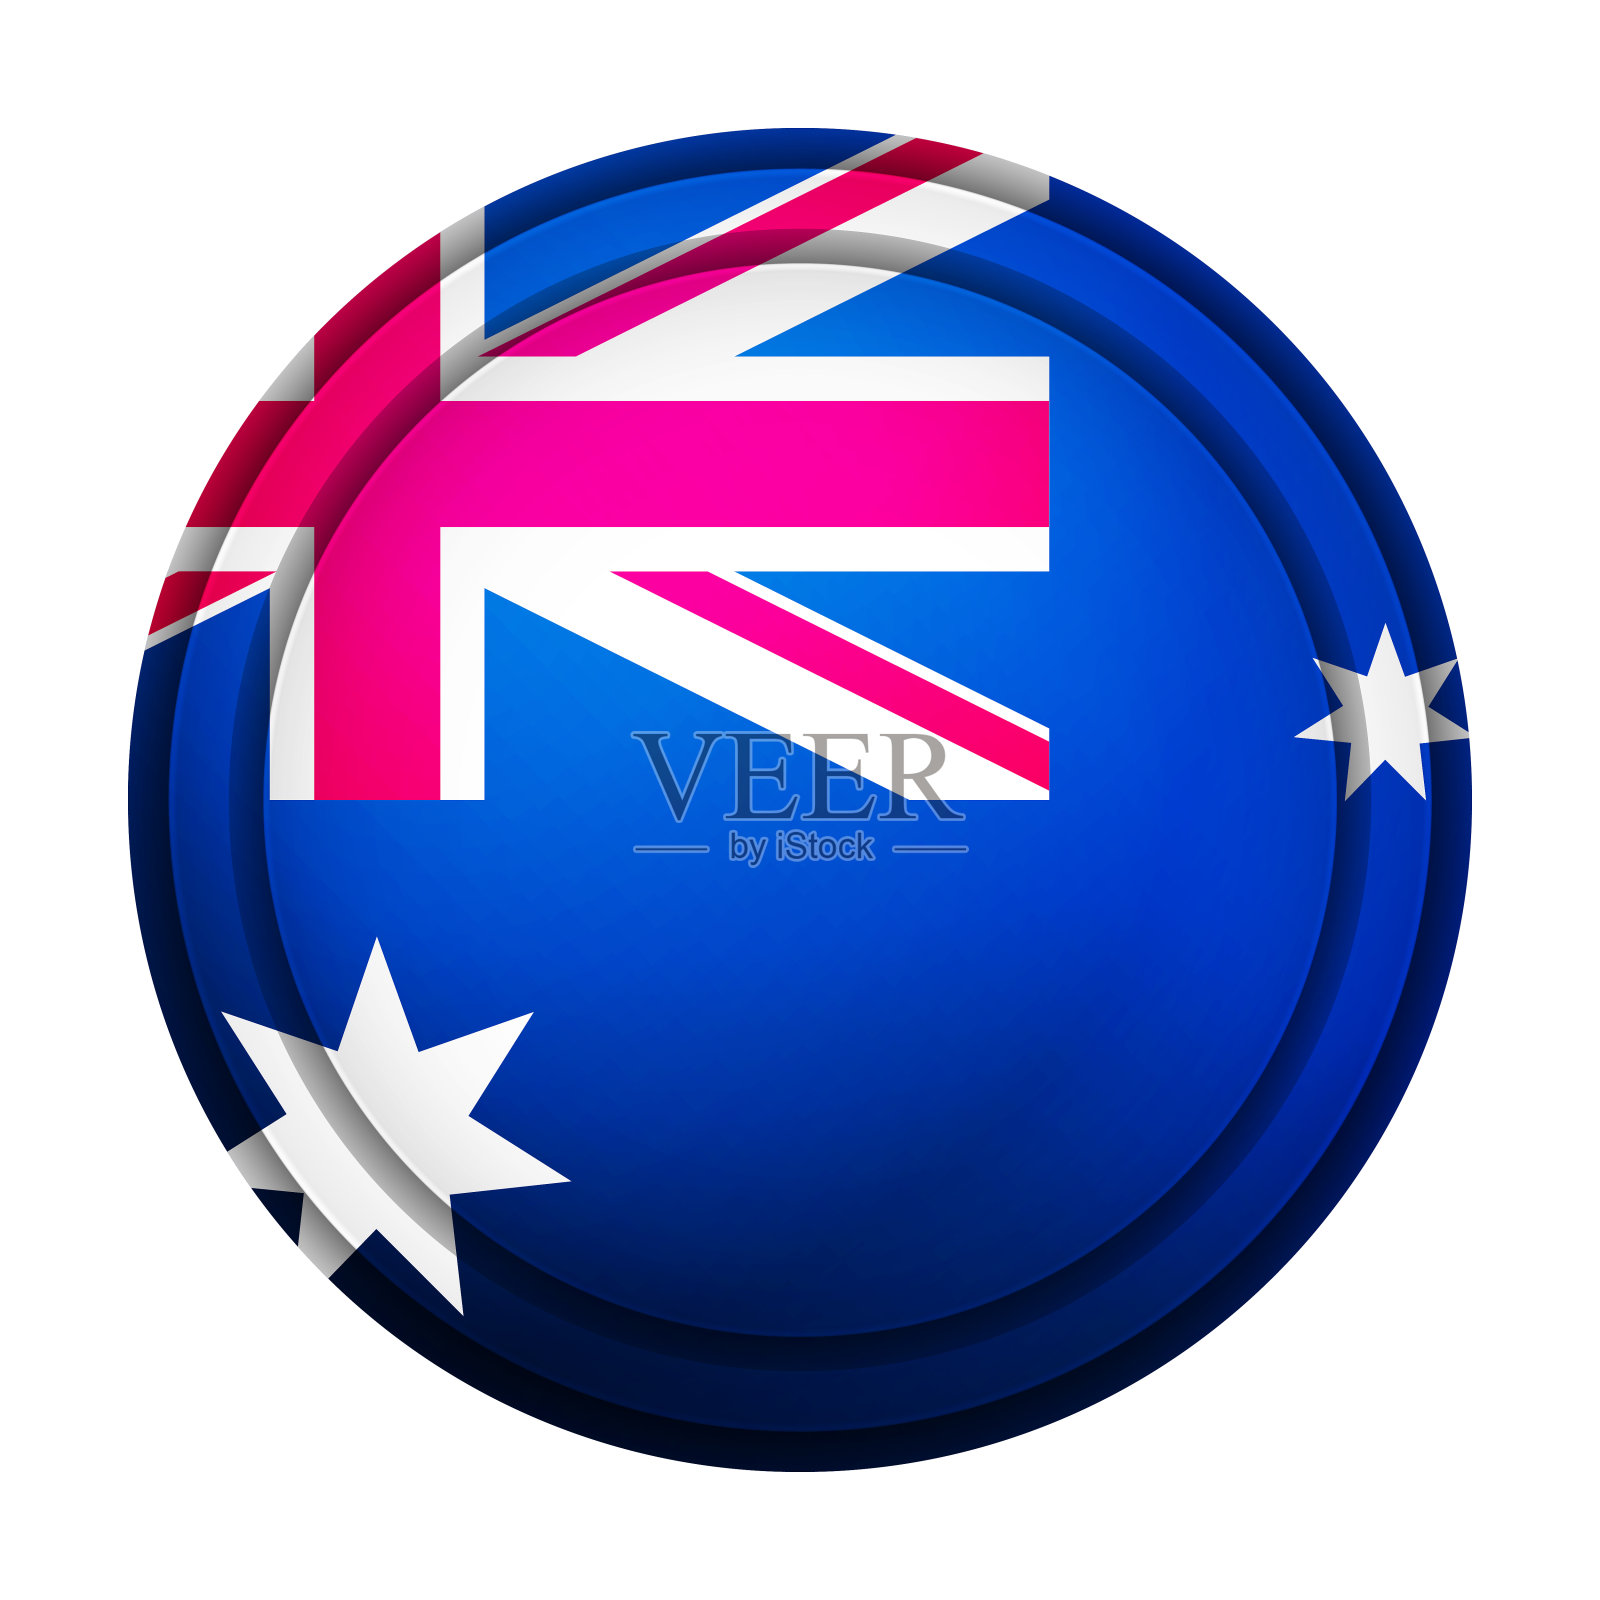 Flags, Symbols & Currency of Australia - World Atlas